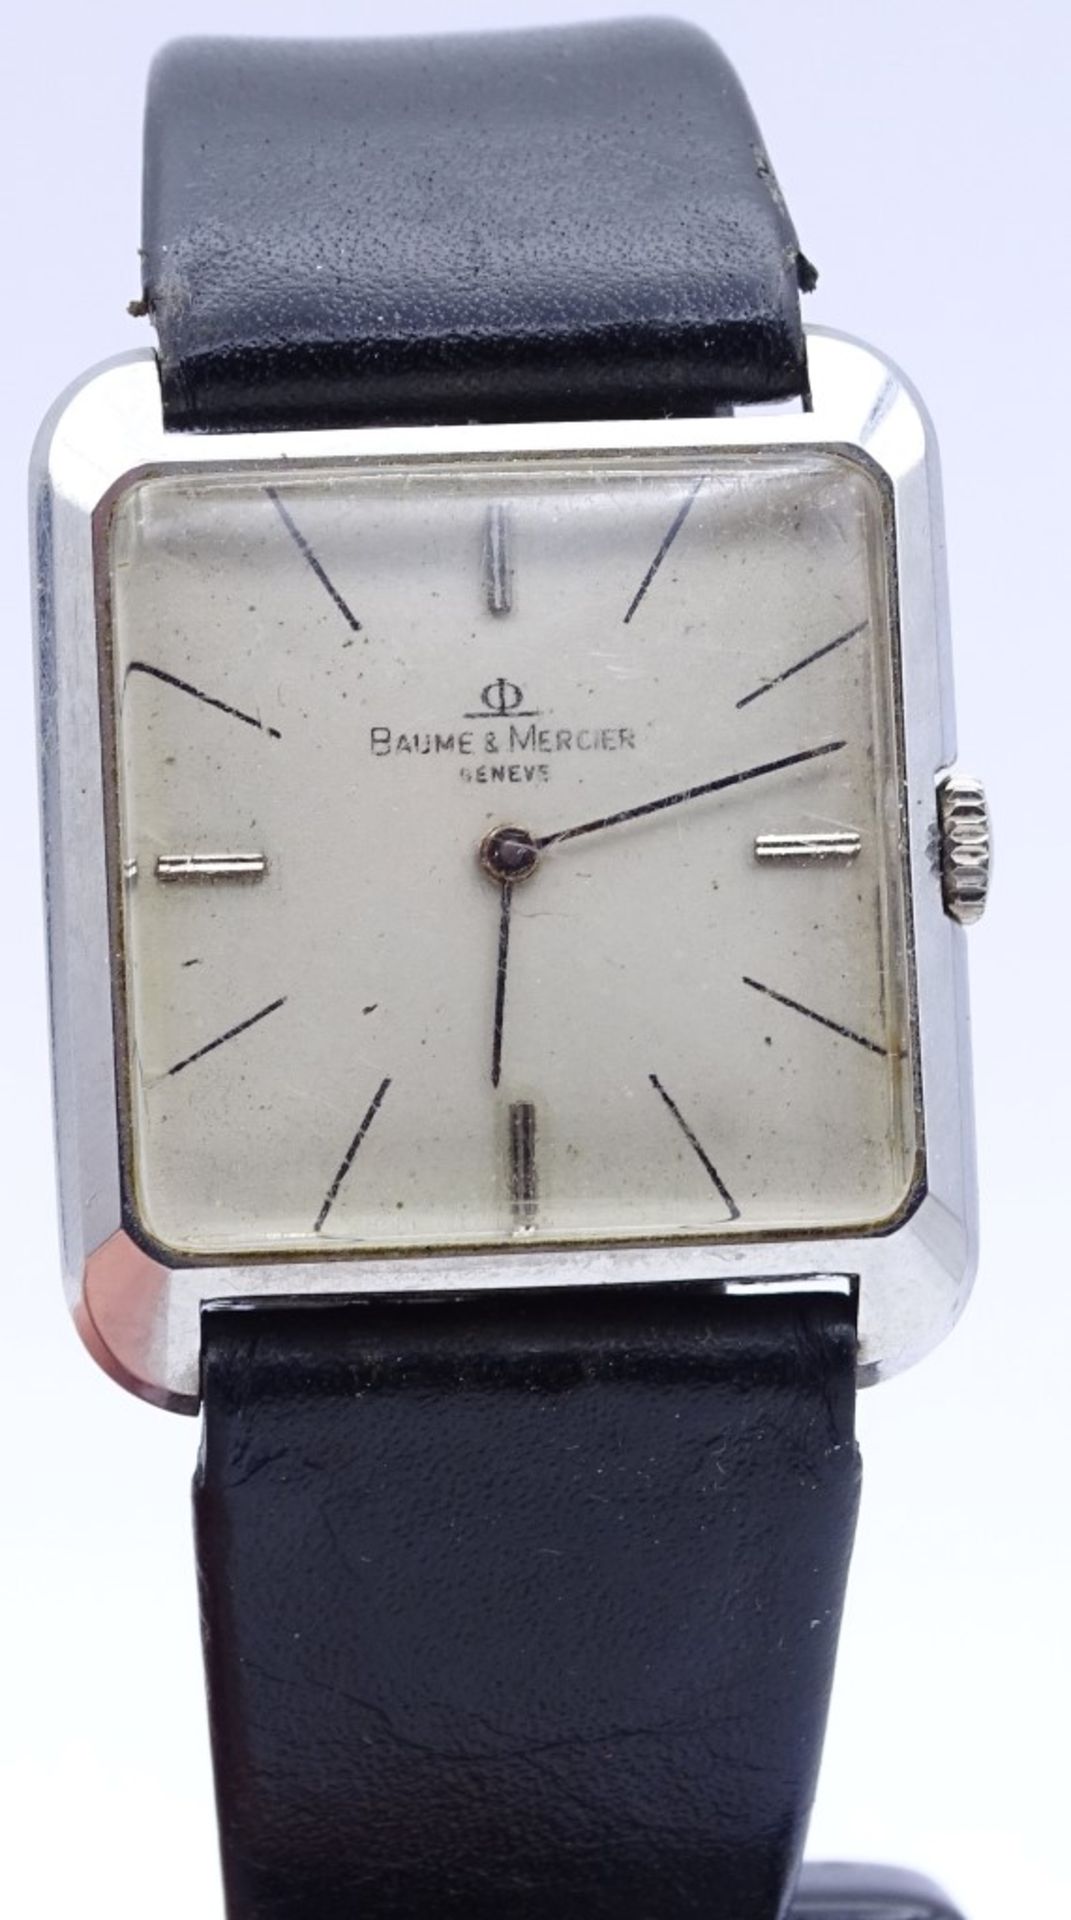 Vintage Armbanduhr "Baume & Mercier", Cal. 320, mechanisch (Handaufzug),Werk läuft, - Image 3 of 6